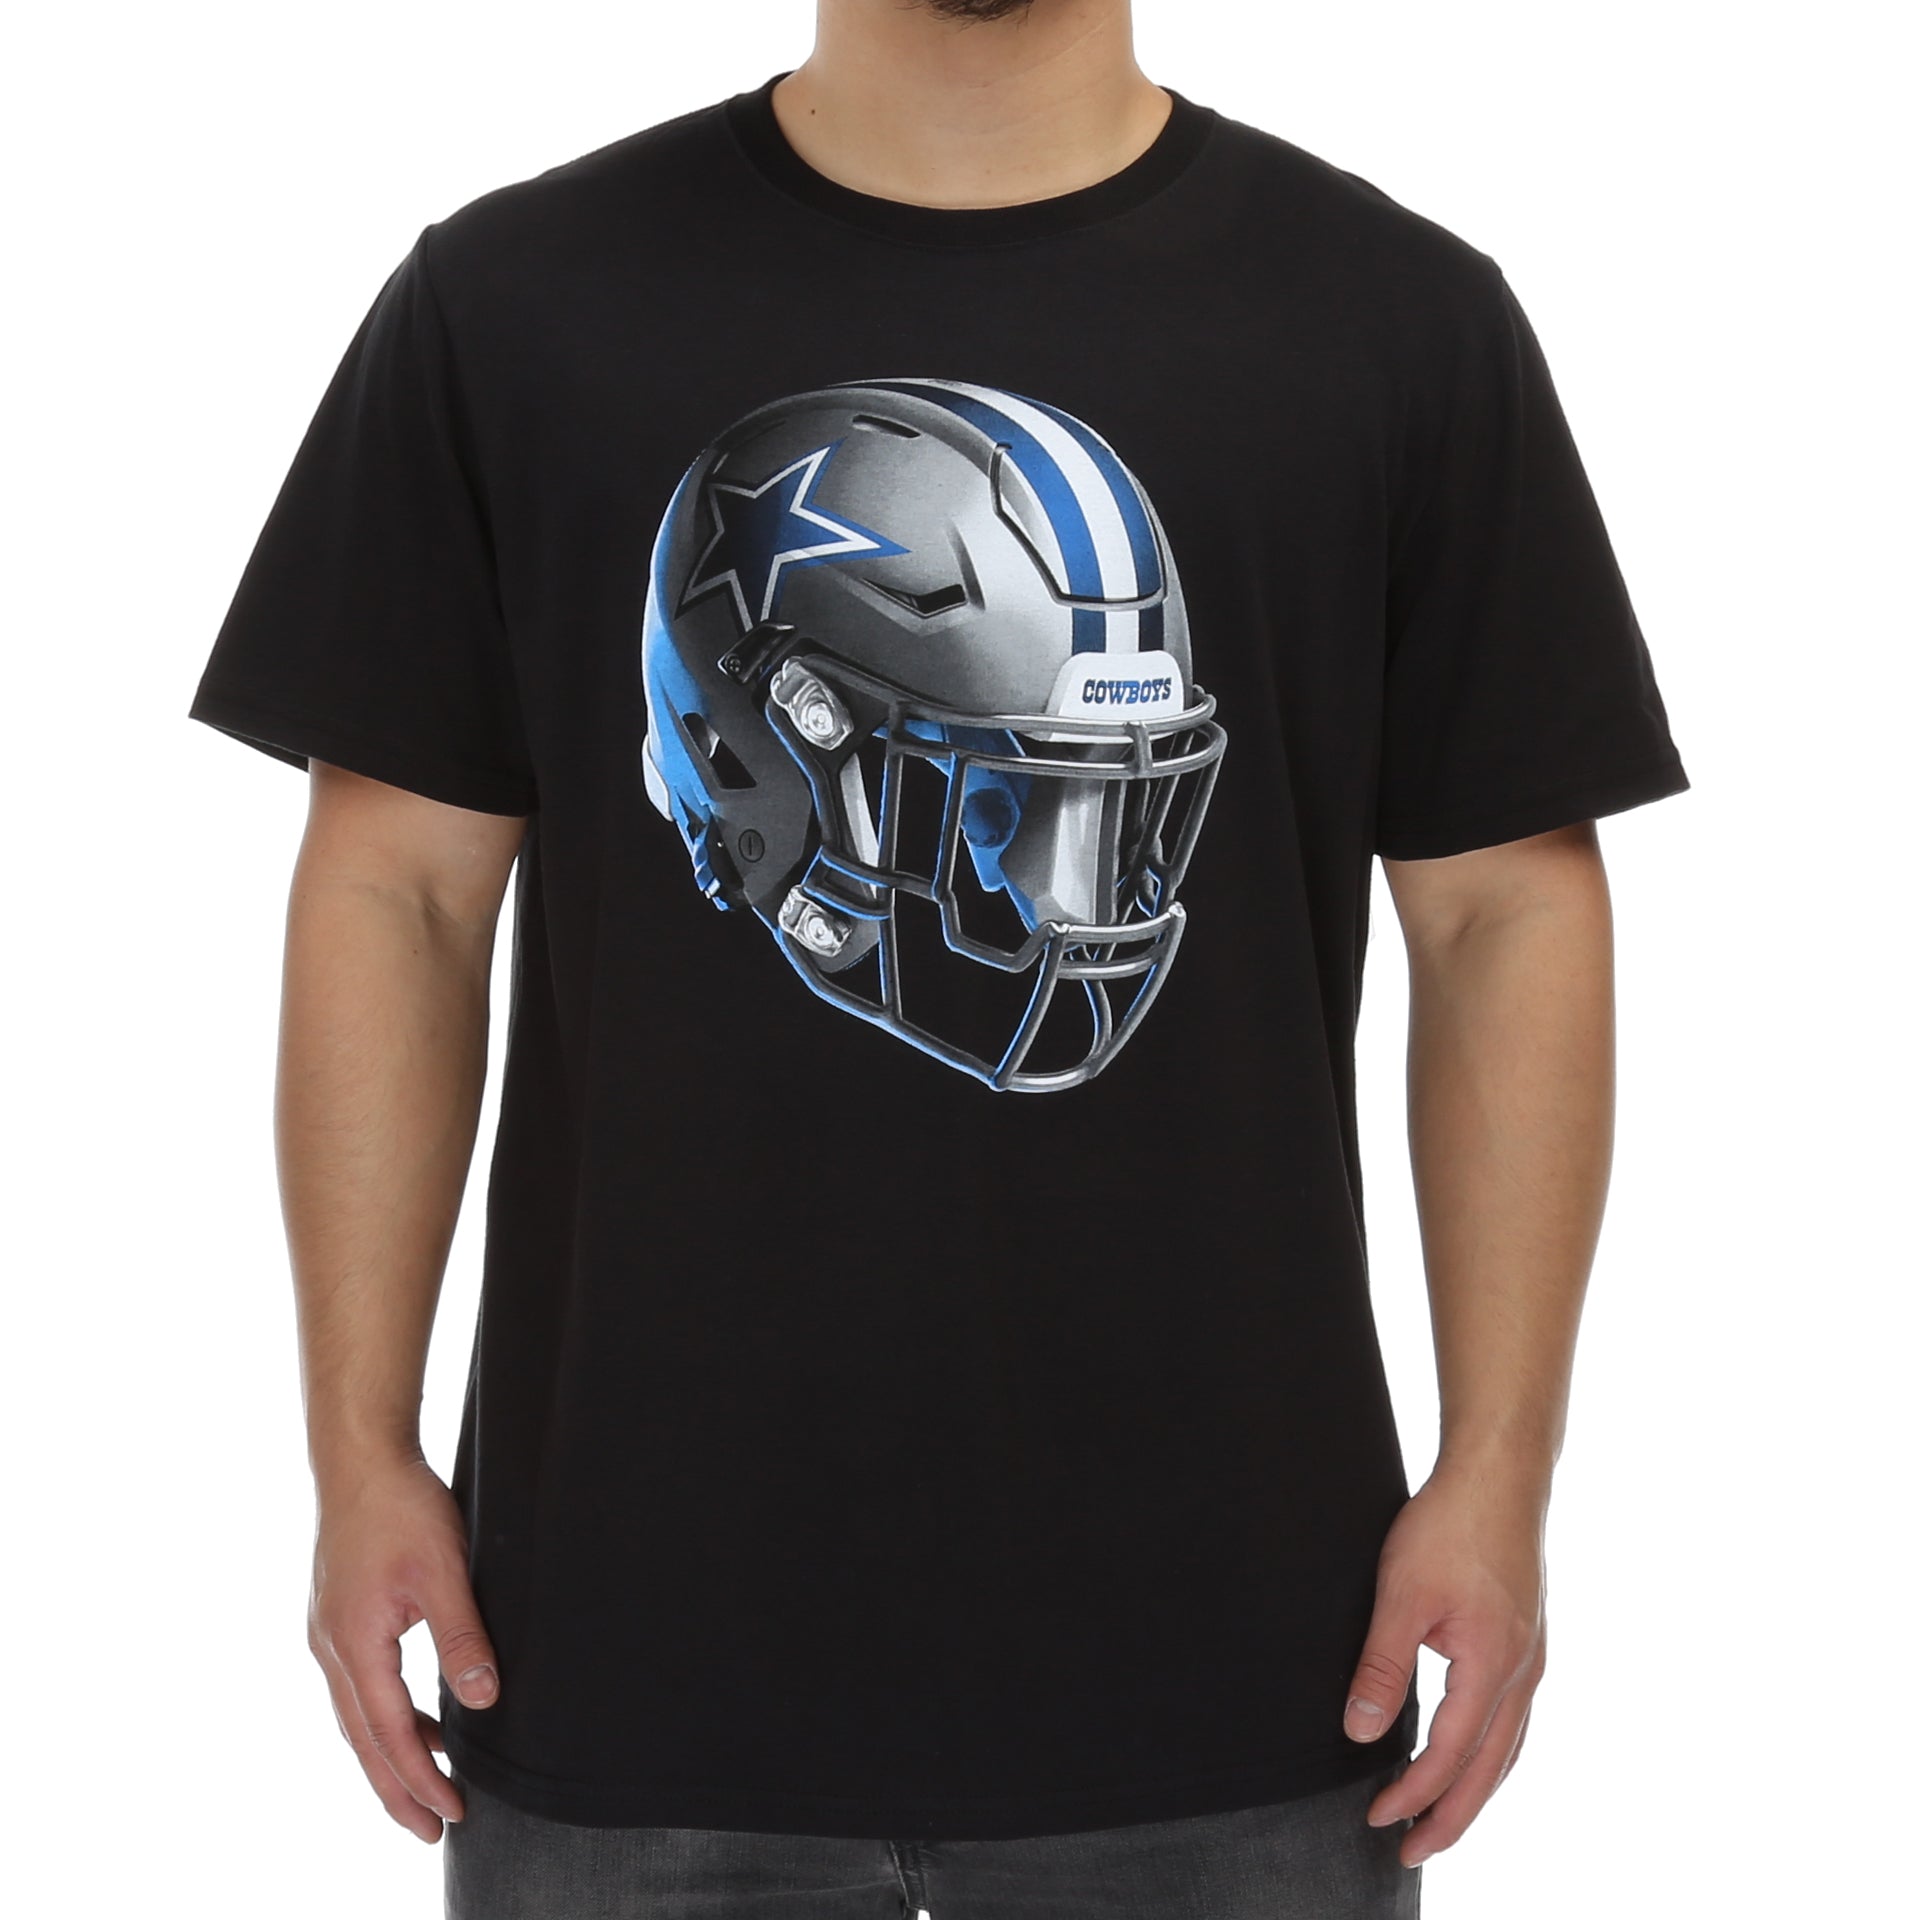 Dallas Cowboys Shirt, Cowboys T-Shirt